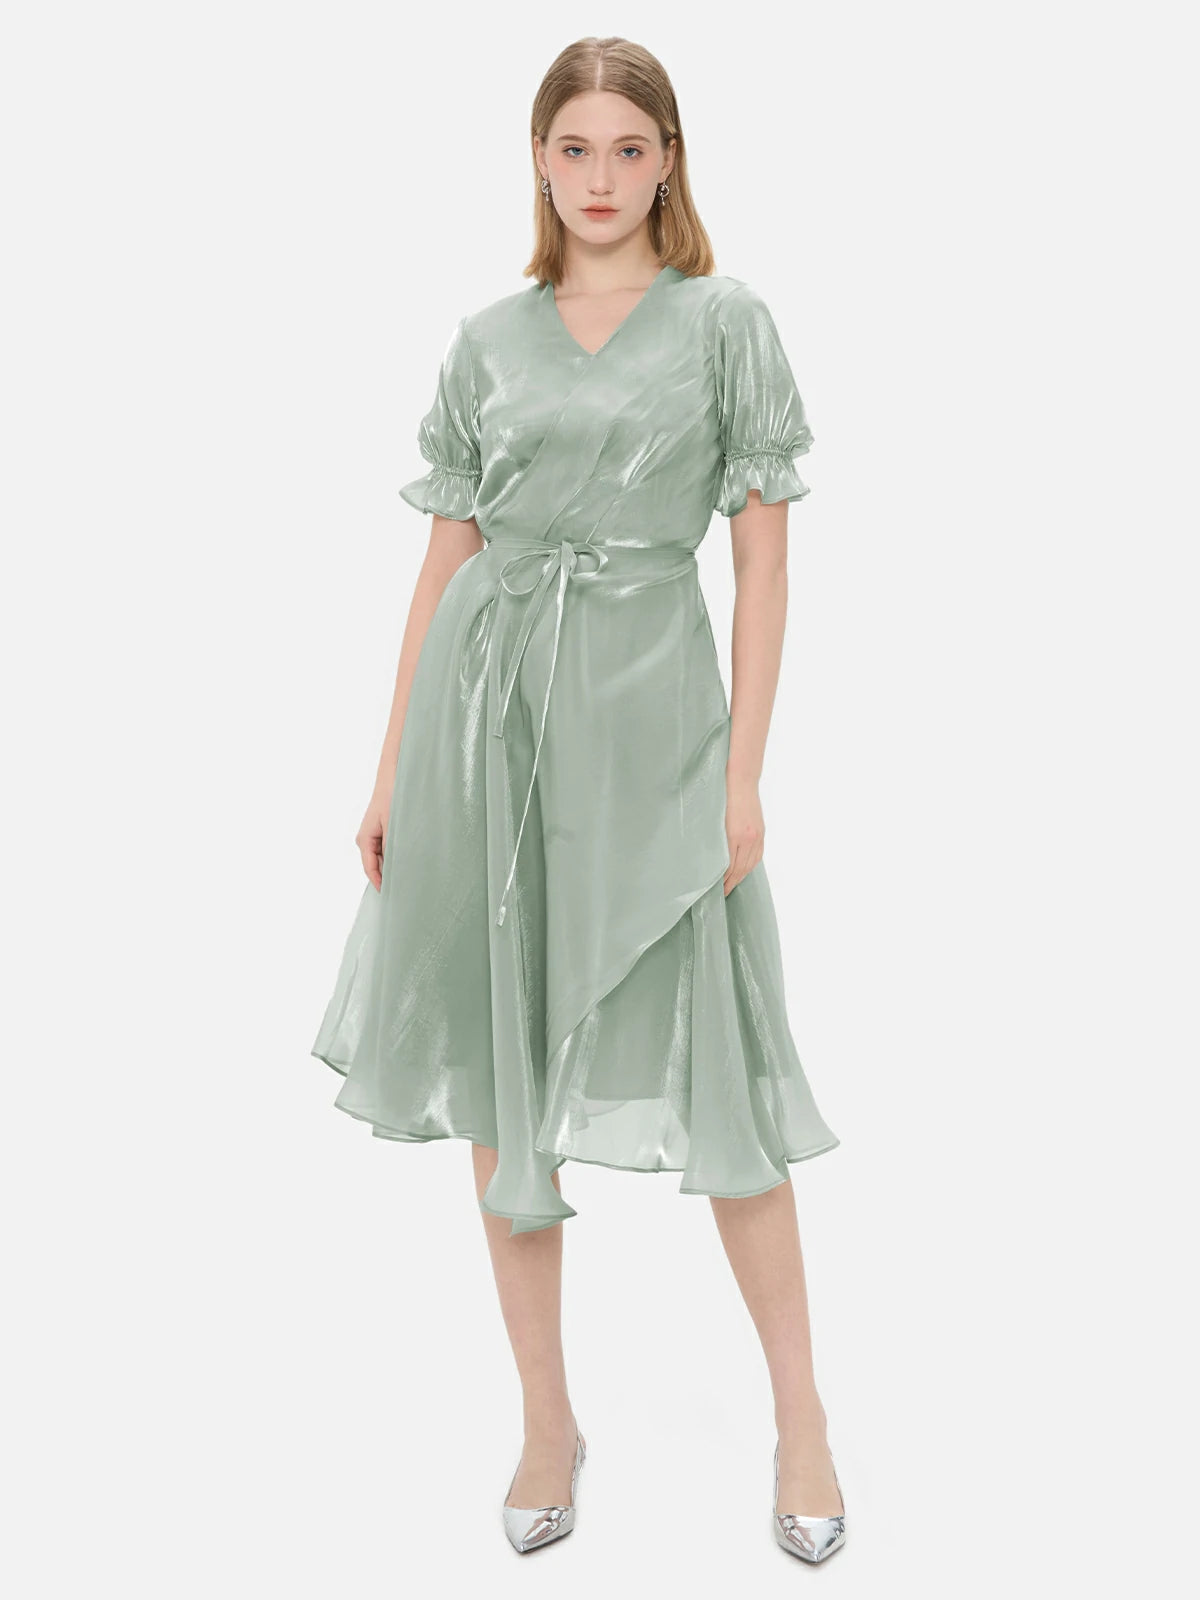 Elegant green short-sleeved dress with V-neck